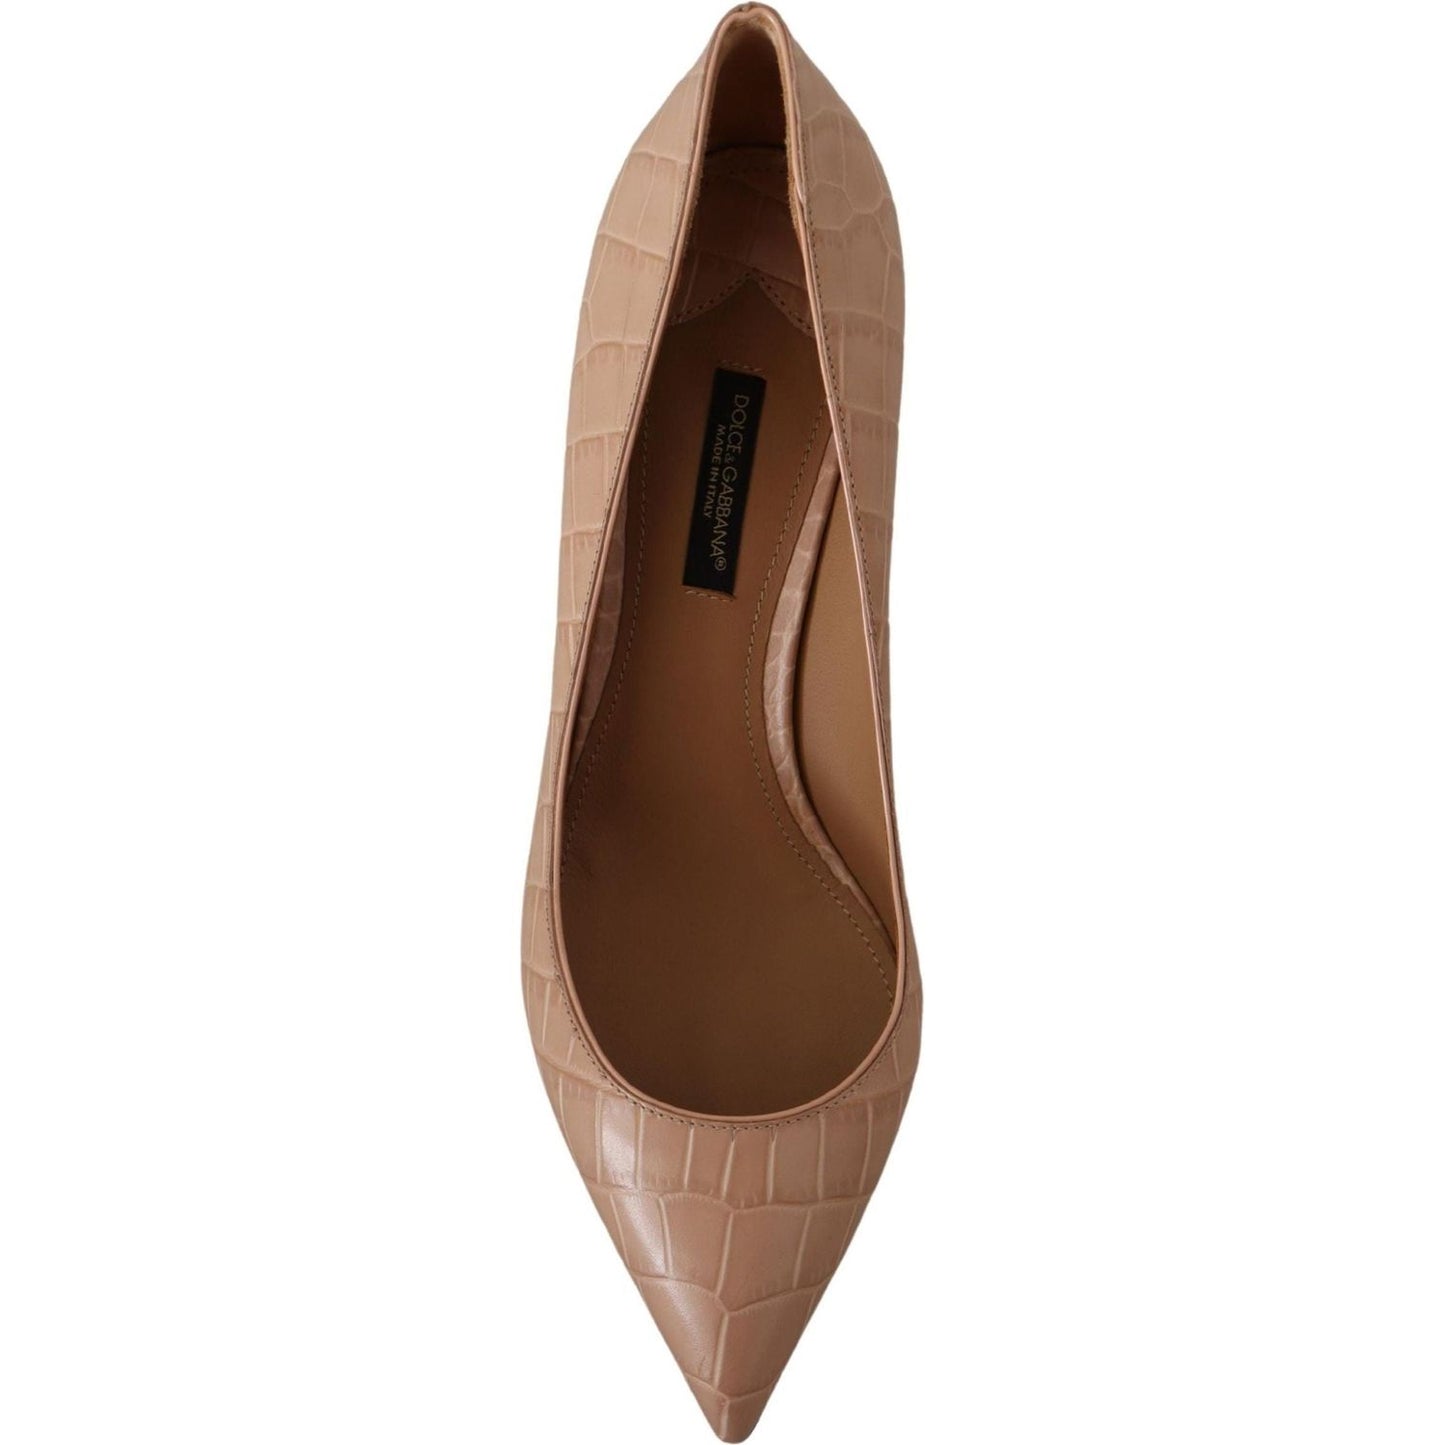 Dolce & Gabbana Elegant Beige Leather Pumps beige-leather-pointed-heels-pumps-shoes IMG_0734-scaled-2f8197f9-062.jpg